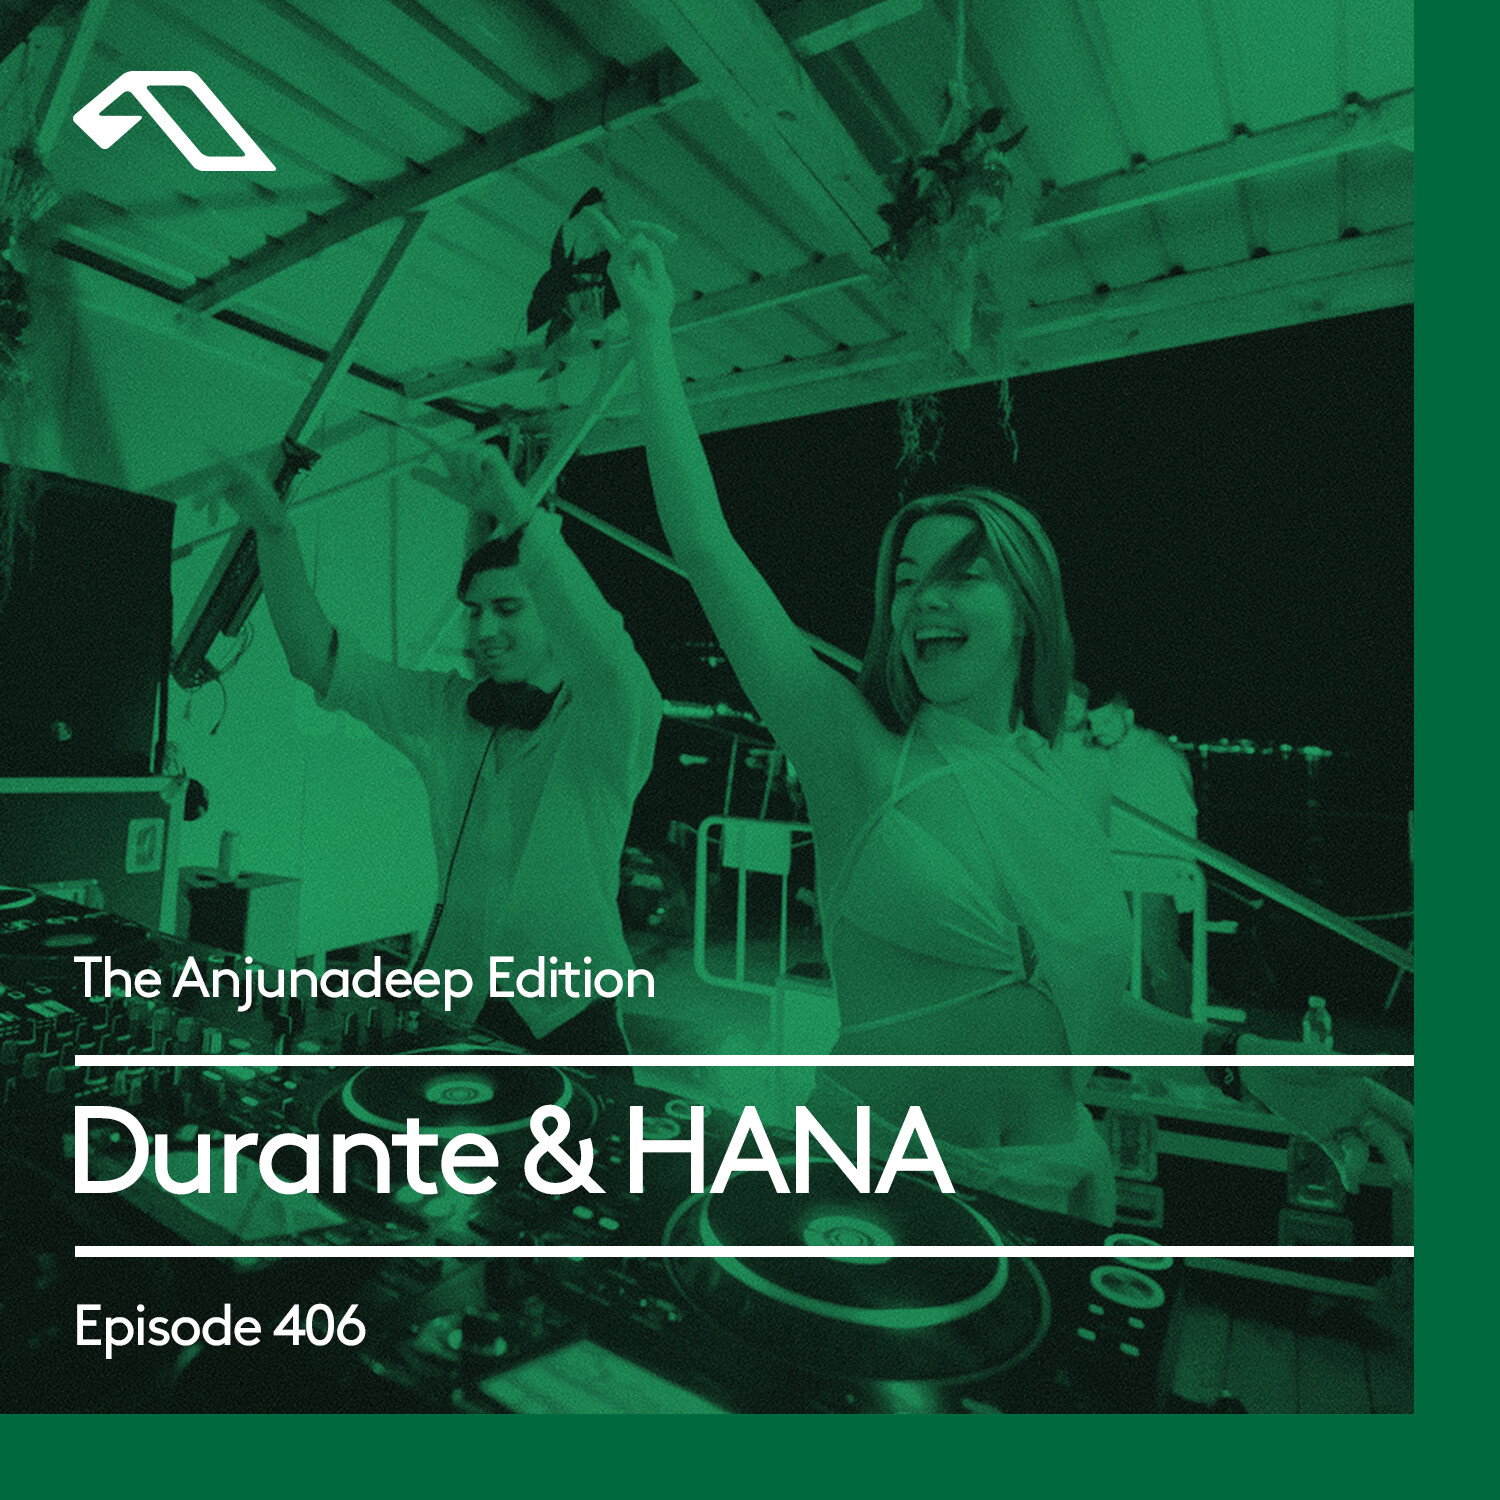 The Anjunadeep Edition 406 with Durante & HANA